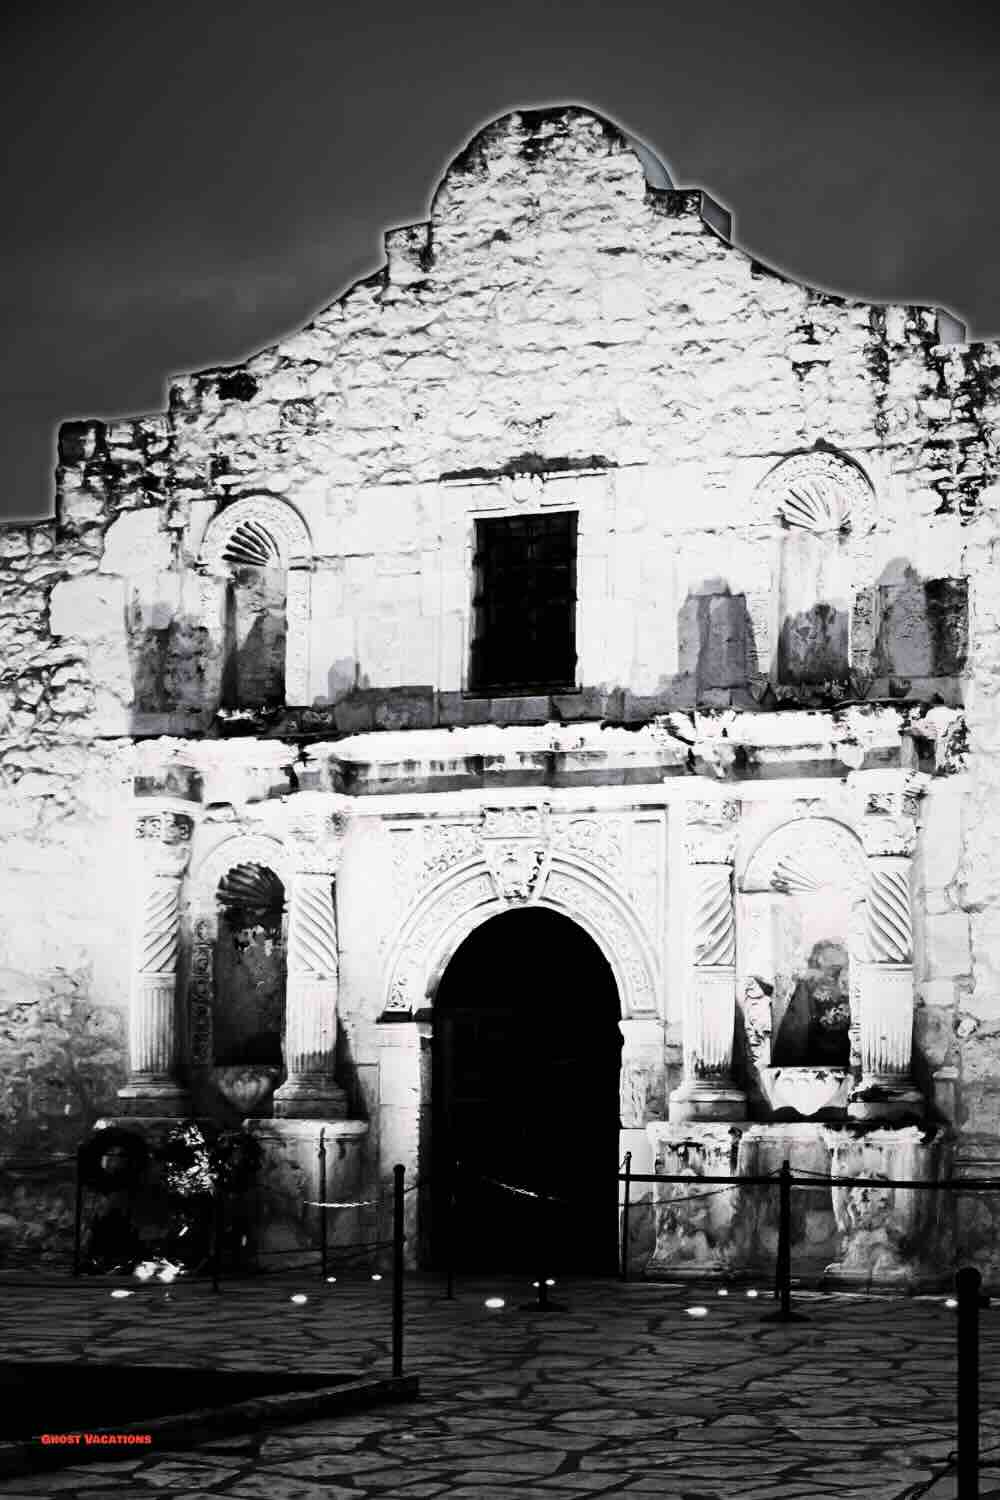 Menger Hotel proximity to the Alamo bloodbath helps make it a haunted hotel in San Antonio TX.